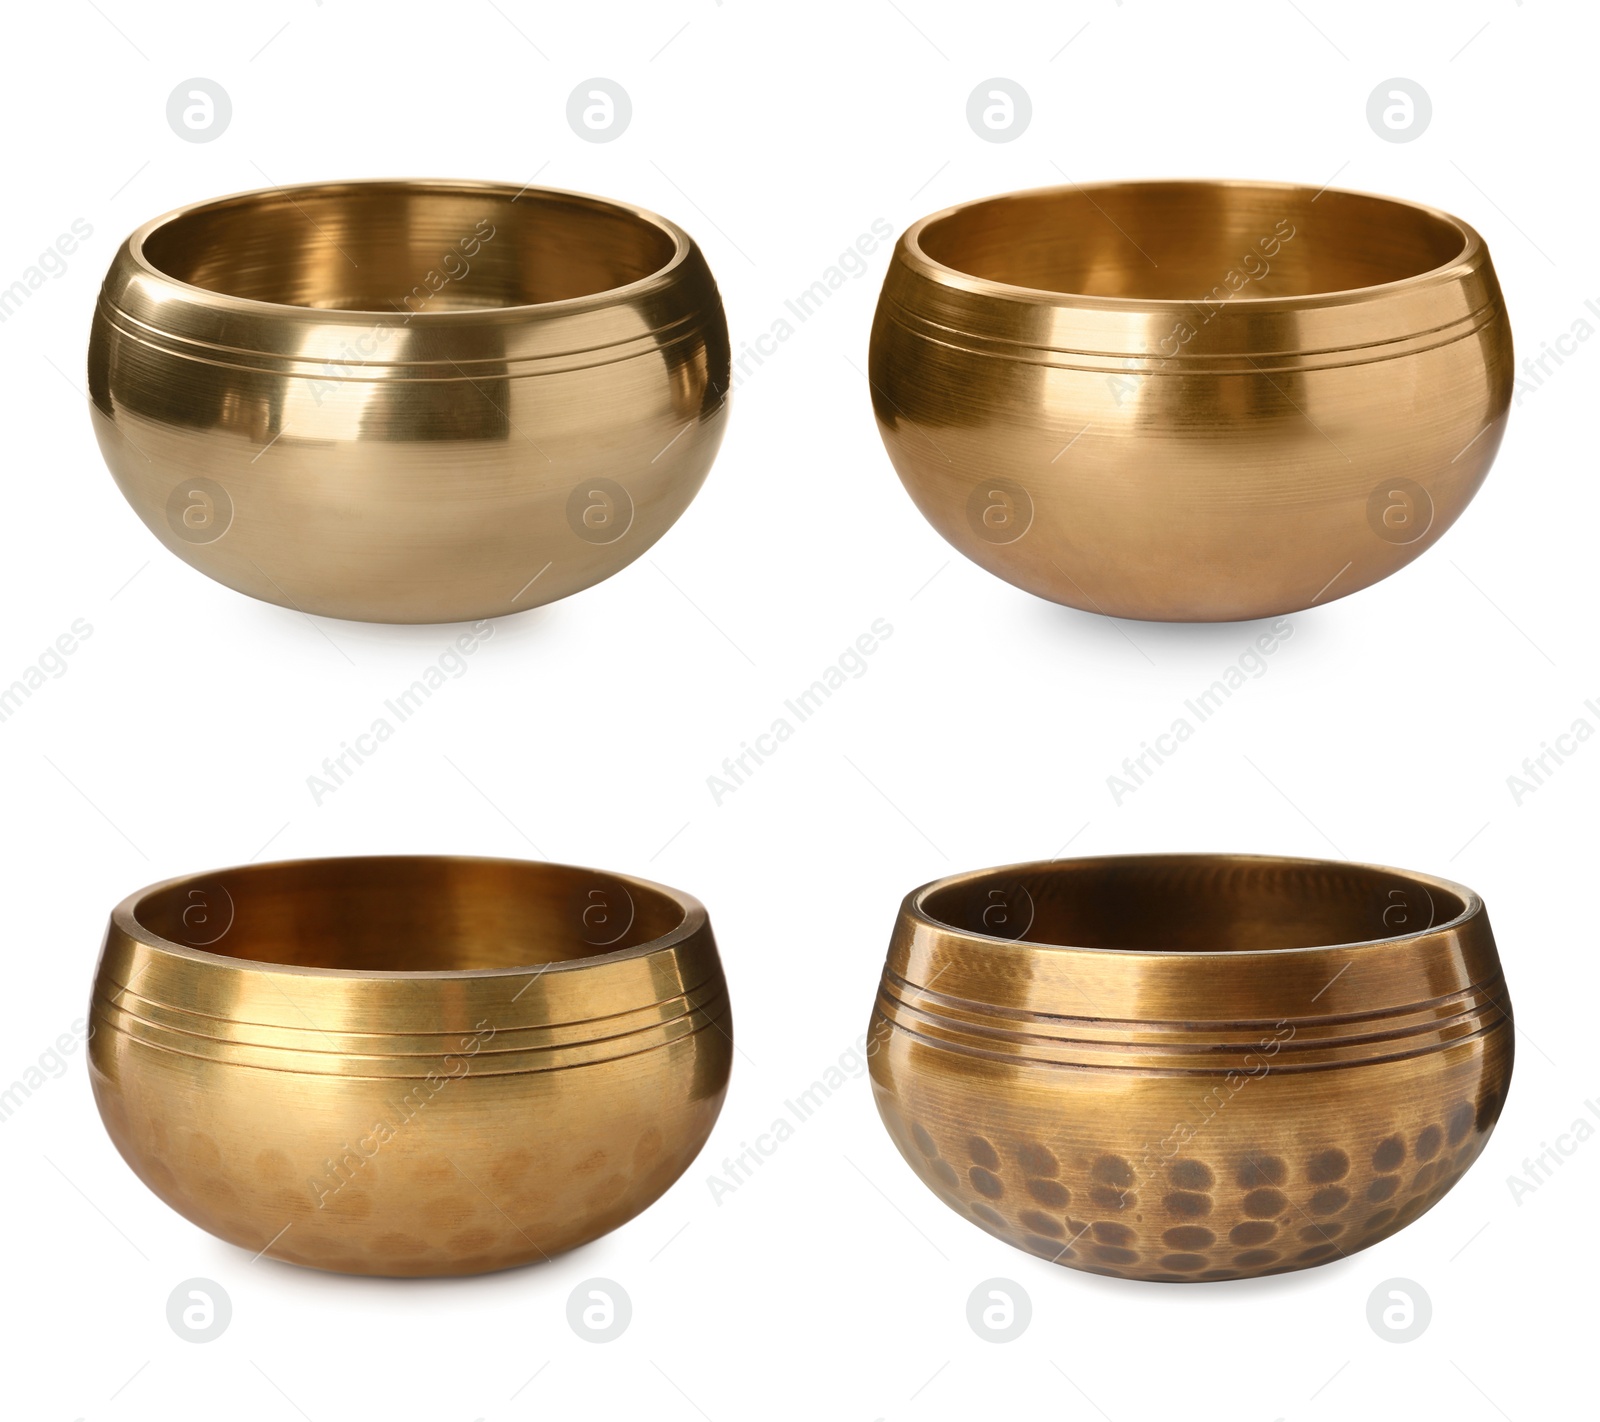 Image of Set with Tibetan singing bowls on white background 